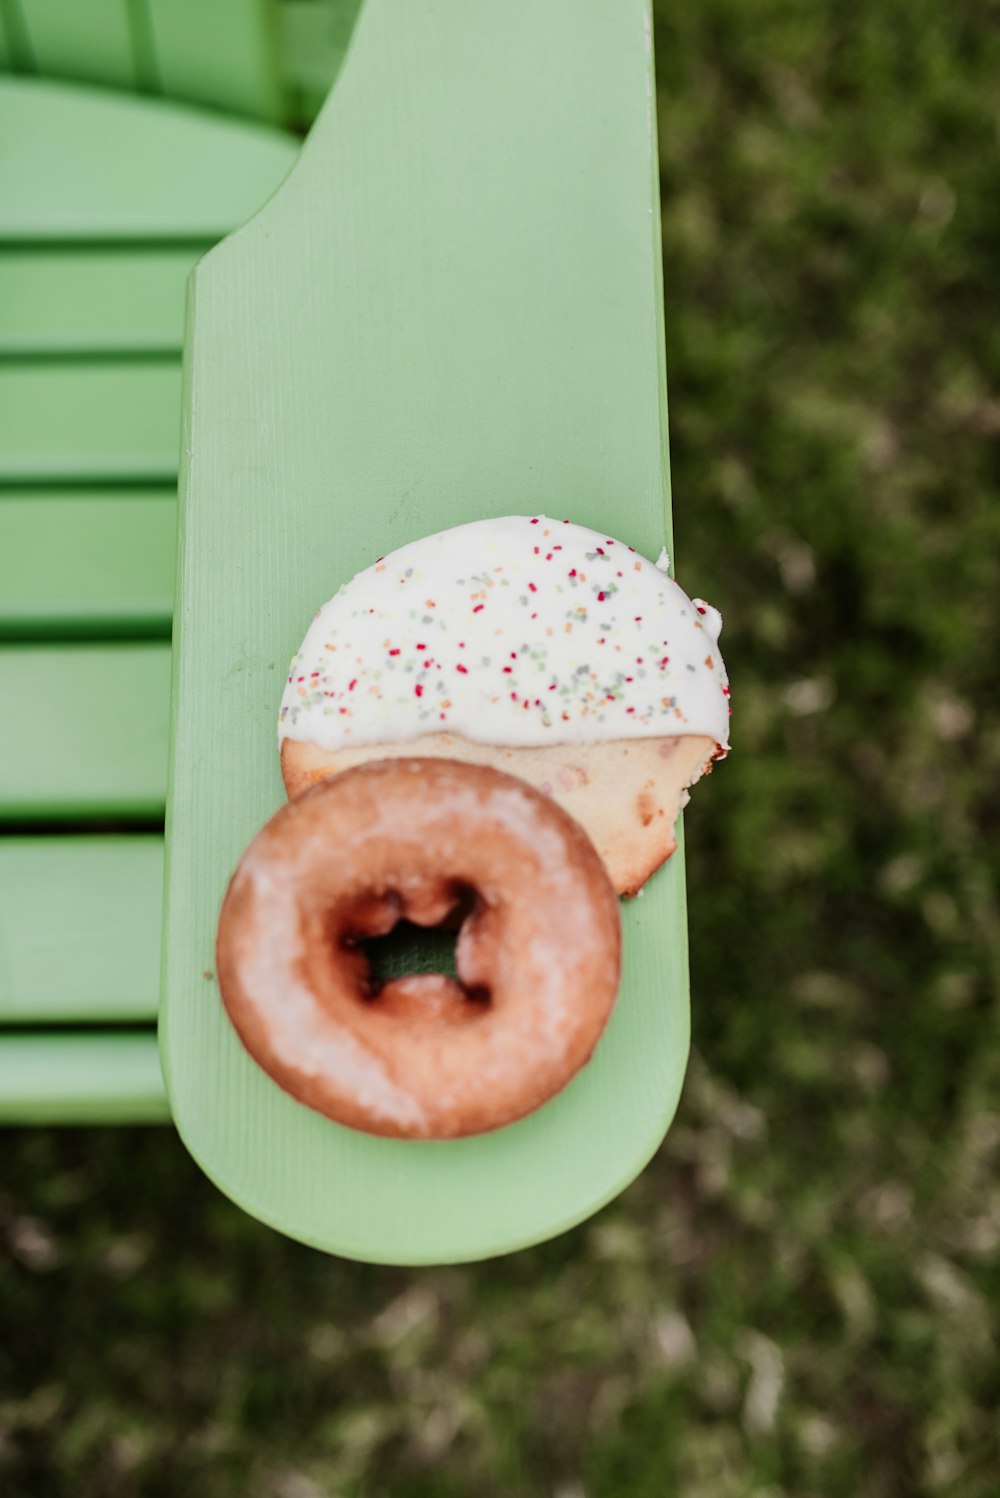 a half eaten doughnut sitting on top of a green bench